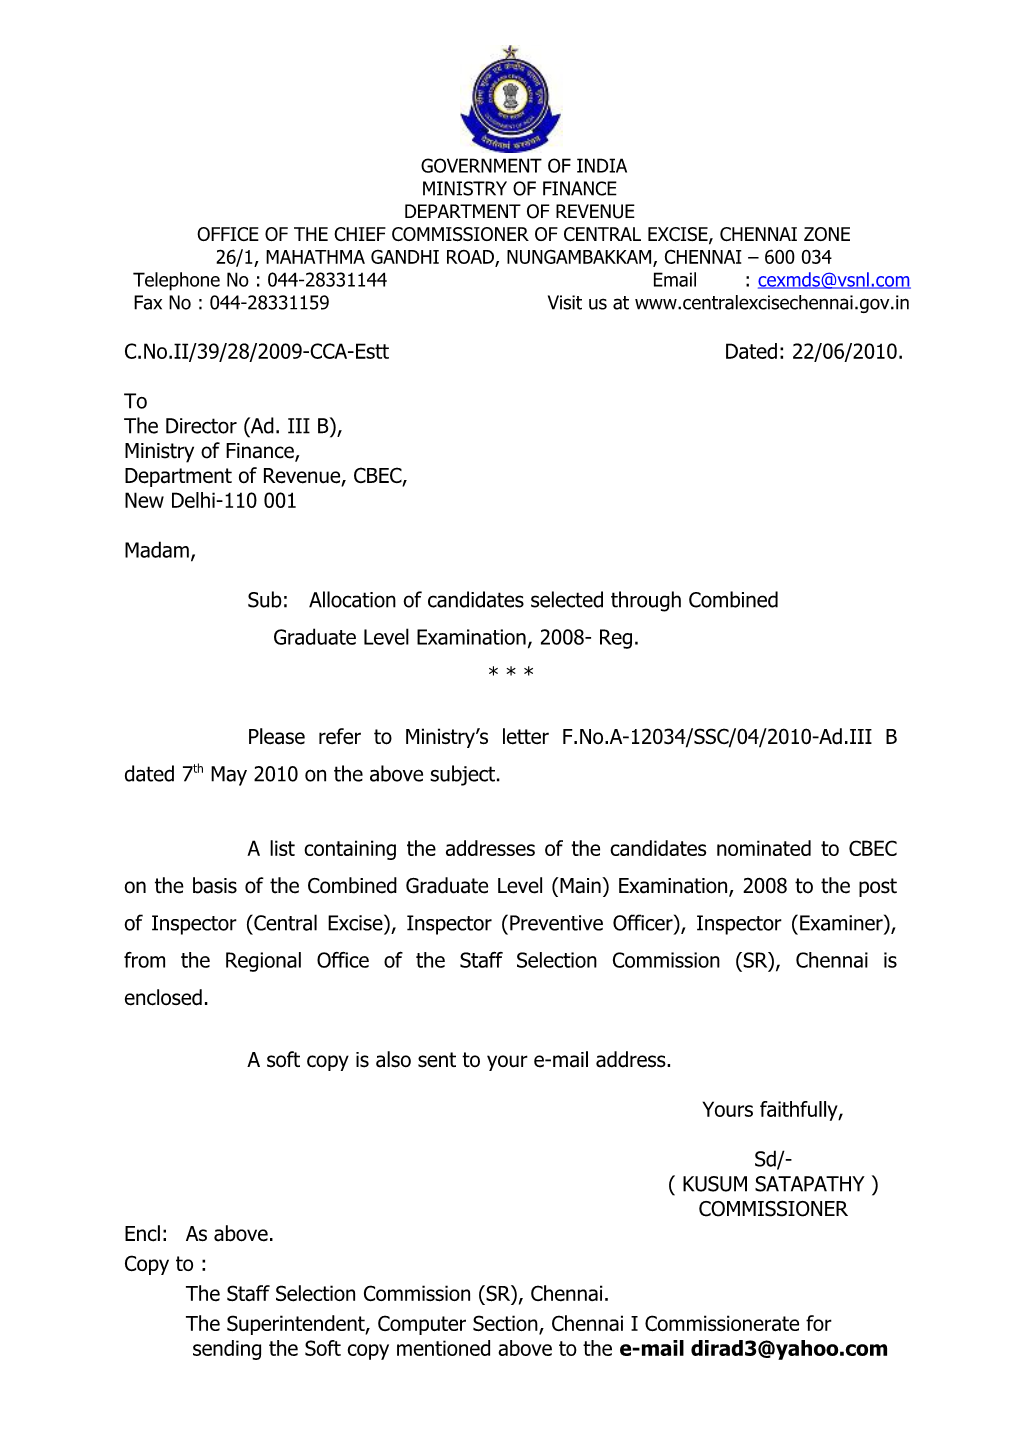 Staff Selection Commission (SR), Chennai